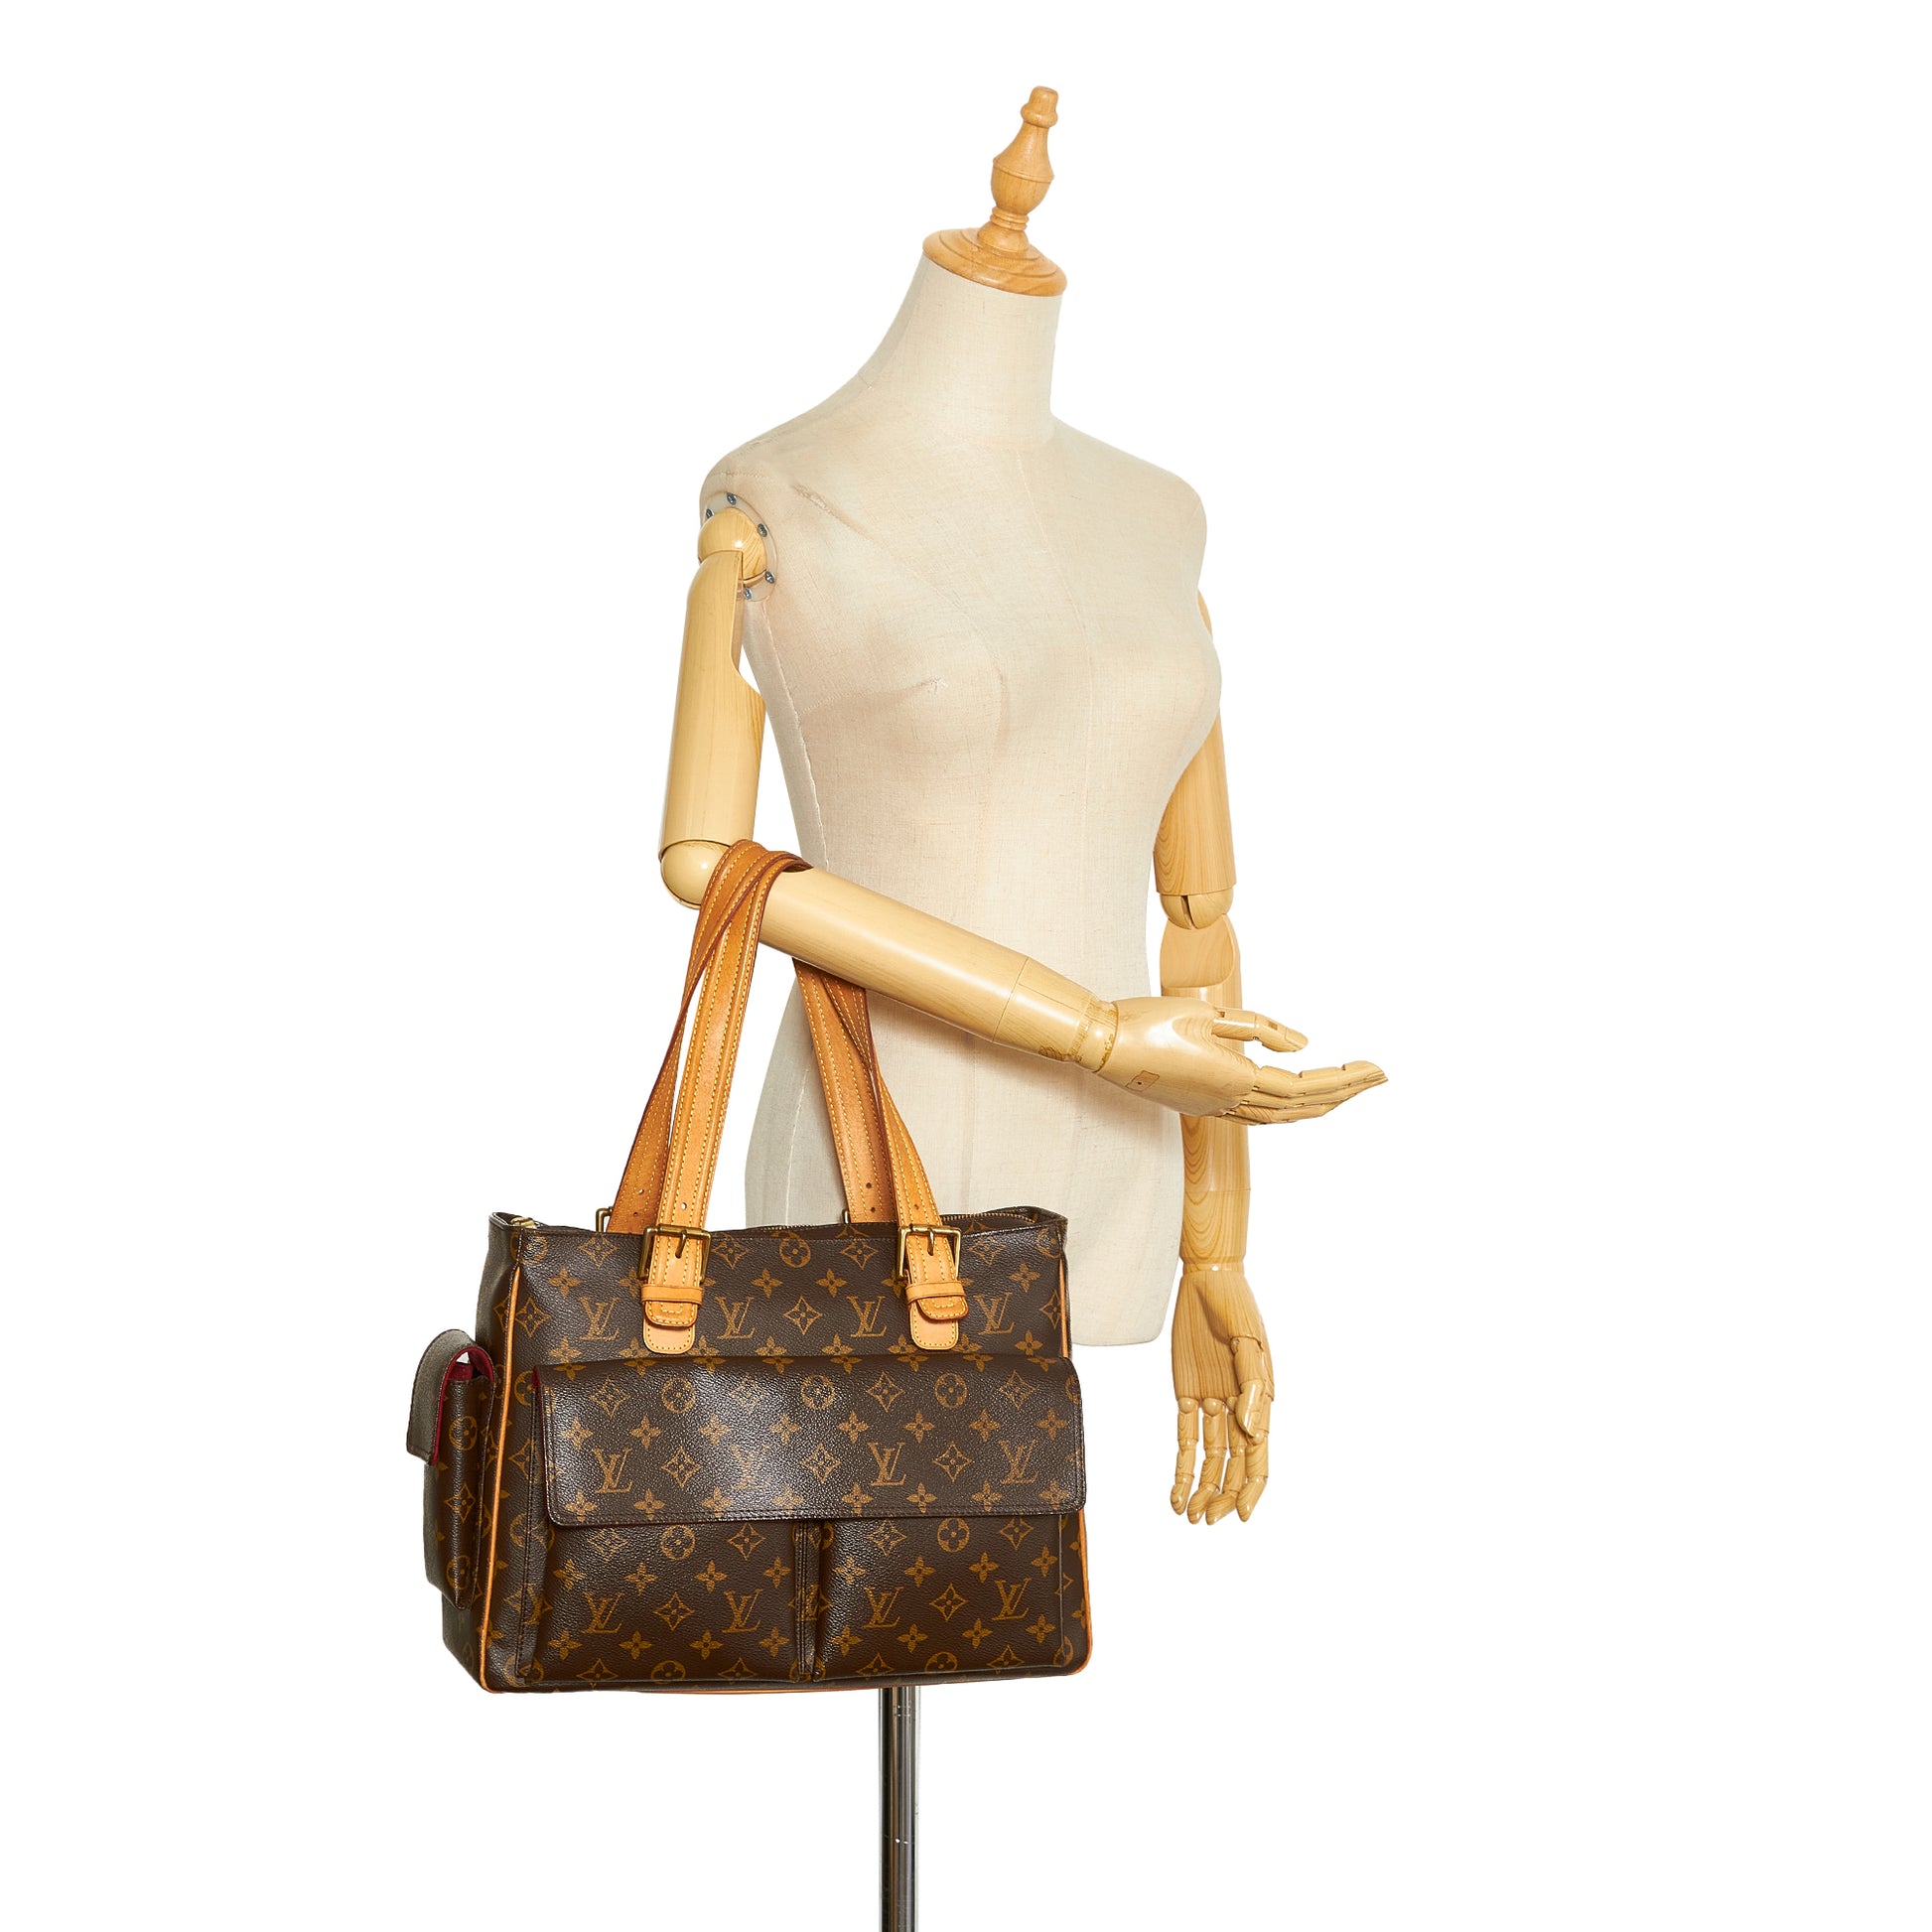 Stark Style - Louis Vuitton Multipli-Cite Bag NOW $399 (Retail